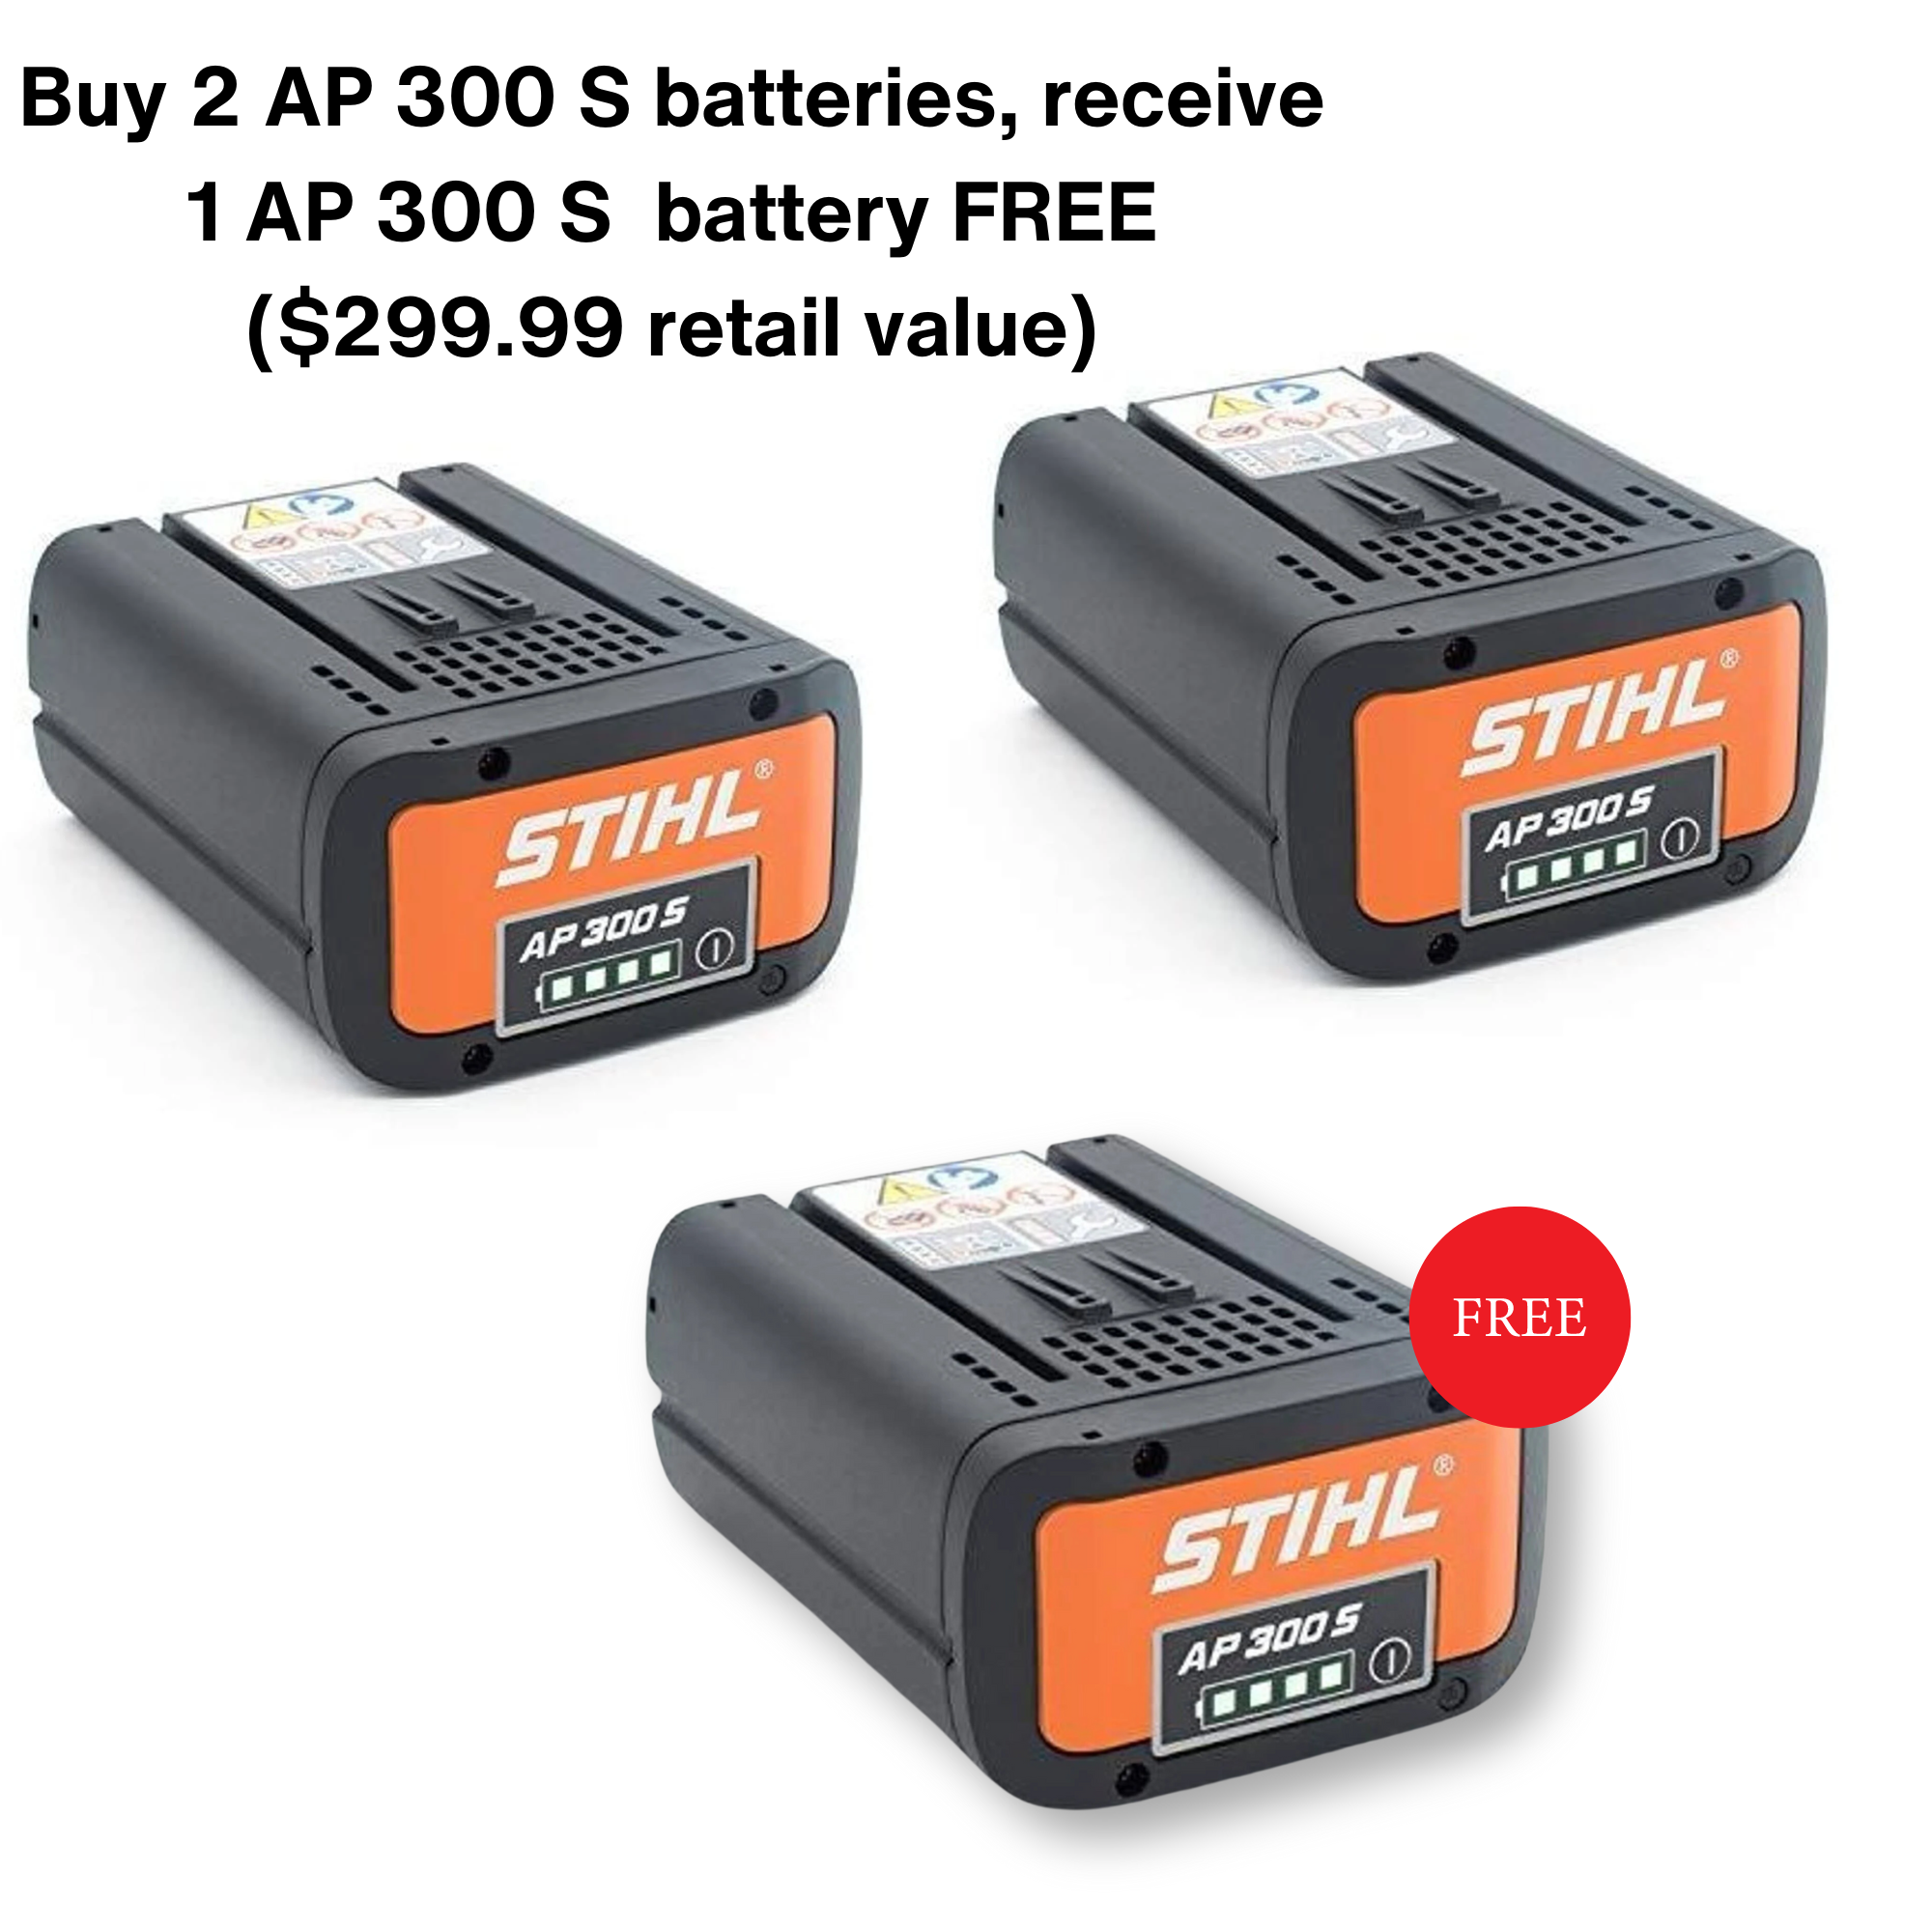 Stihl 2 AP300S Batteries GET 1 FREE AP300S